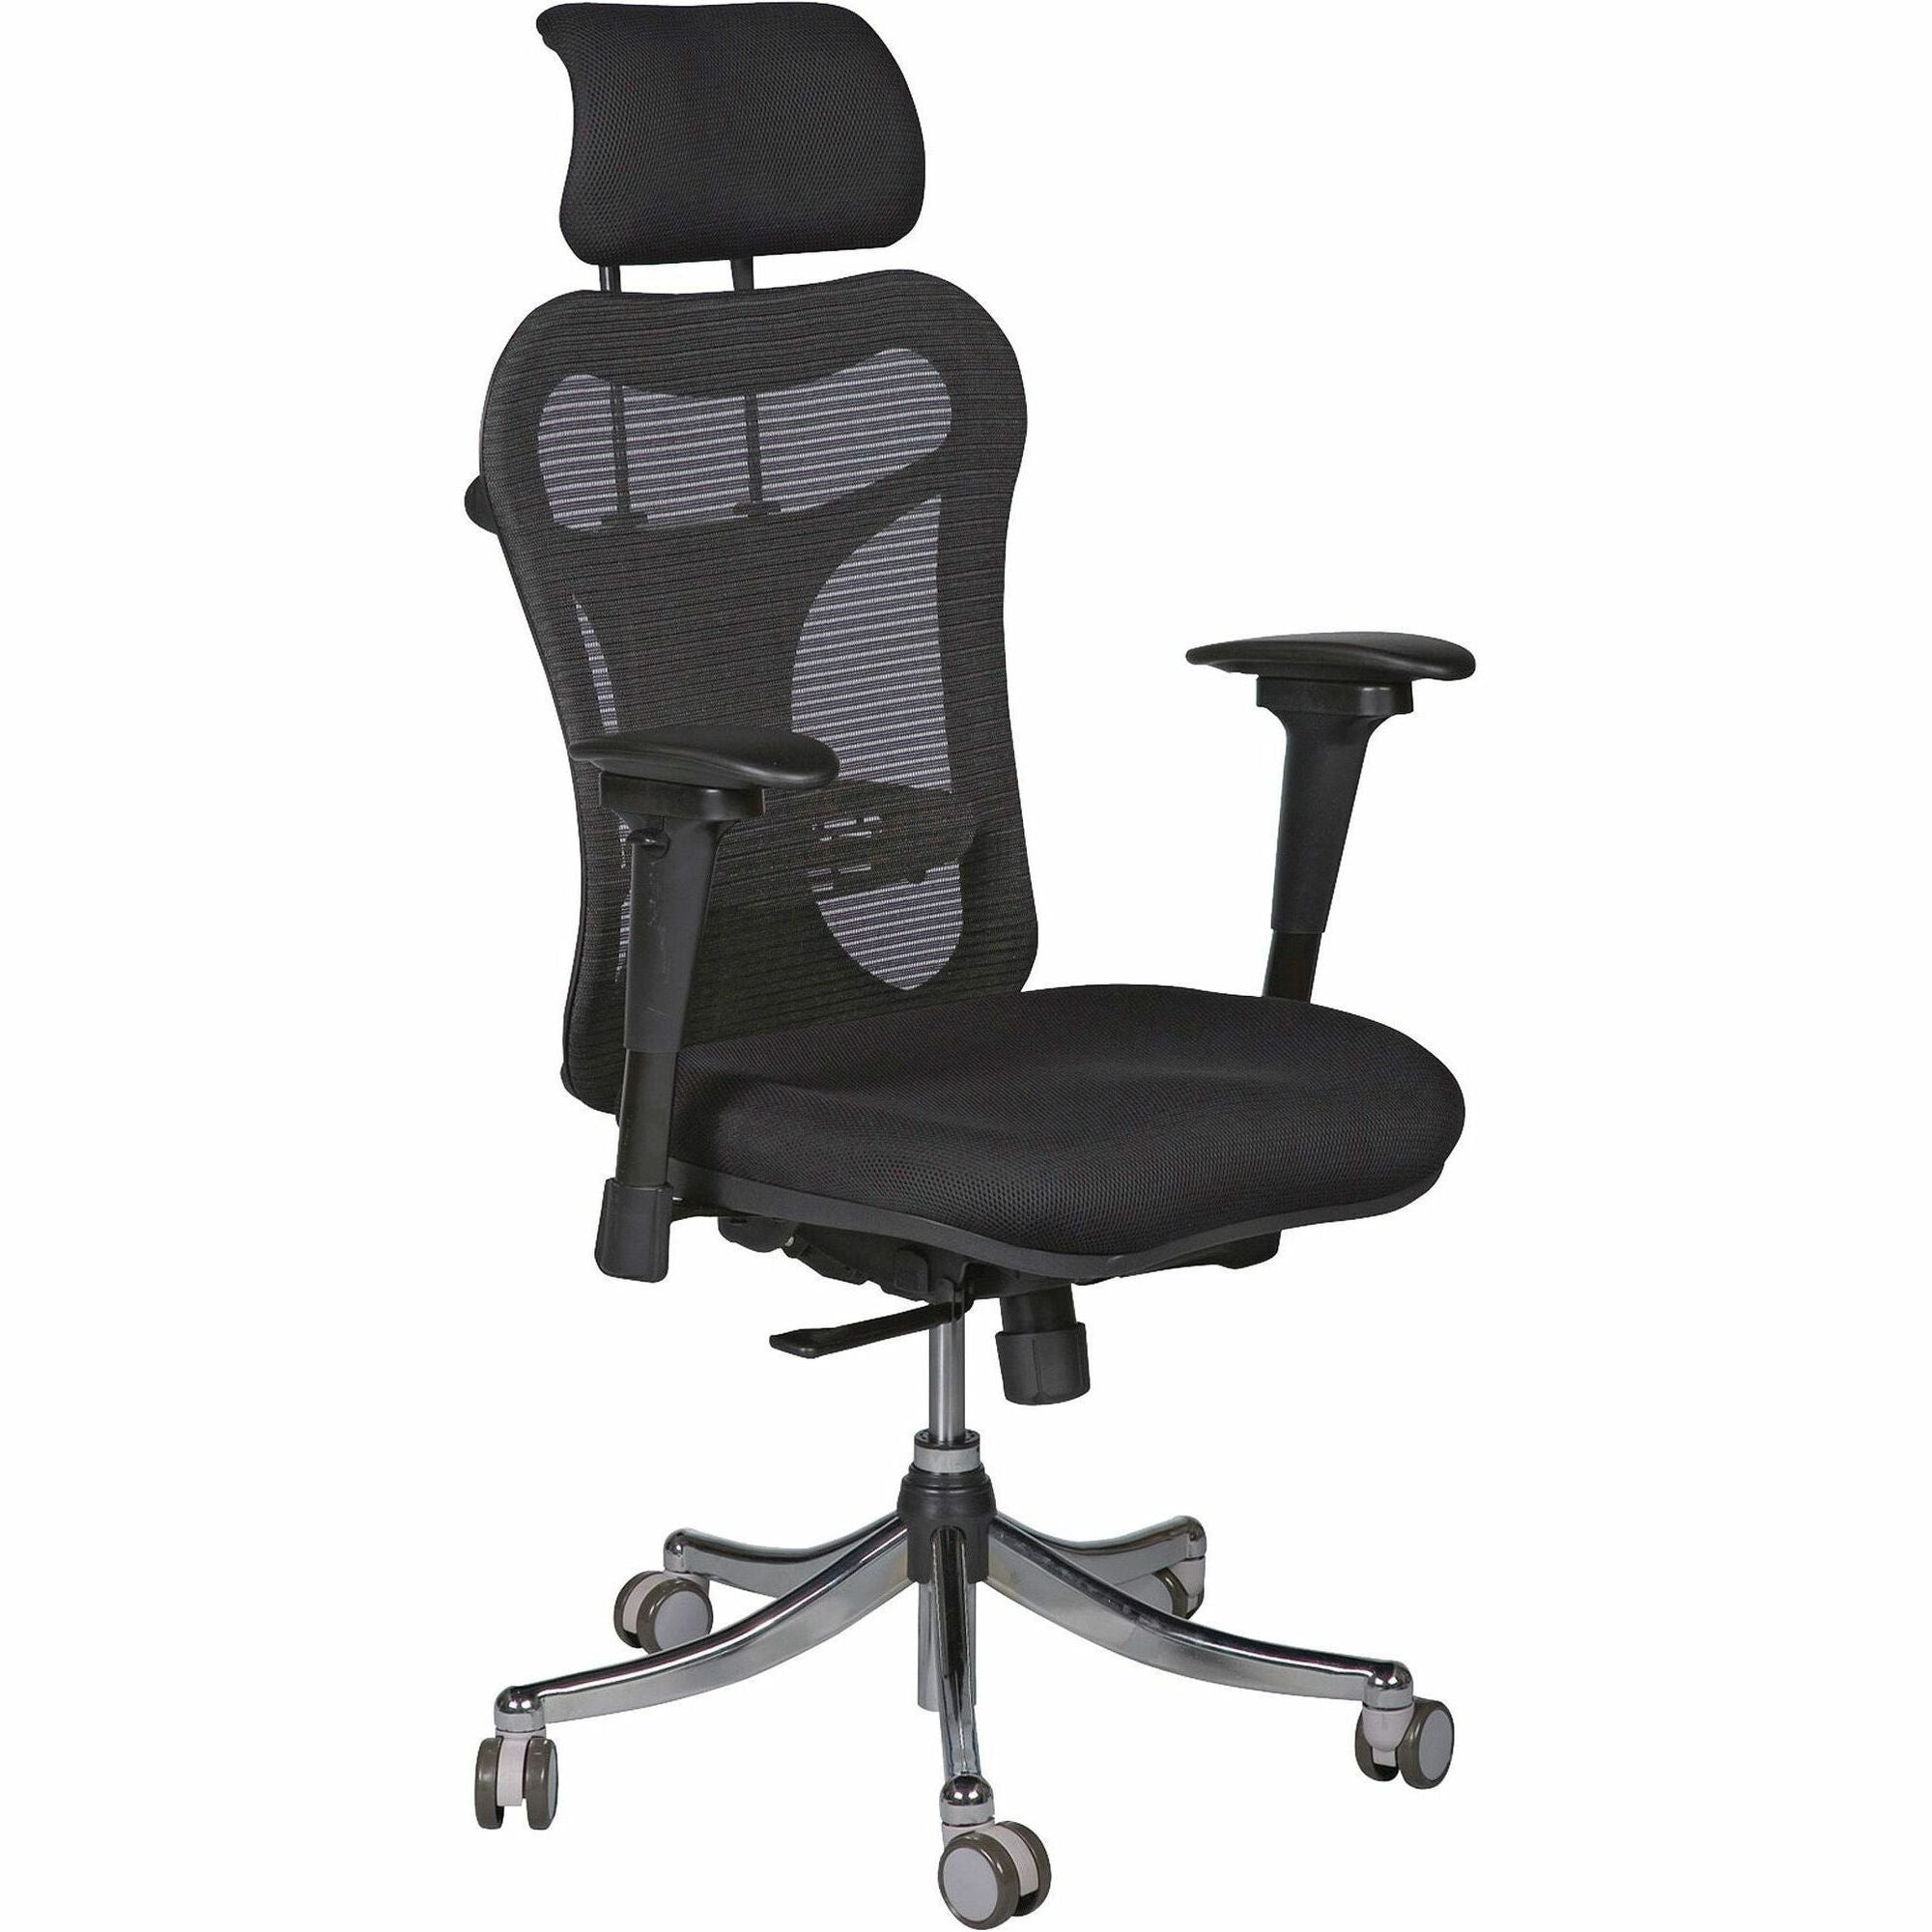 MooreCo Ergo Ex Ergonomic Office Chair - Black Seat - 5-star Base - 1 Each - 